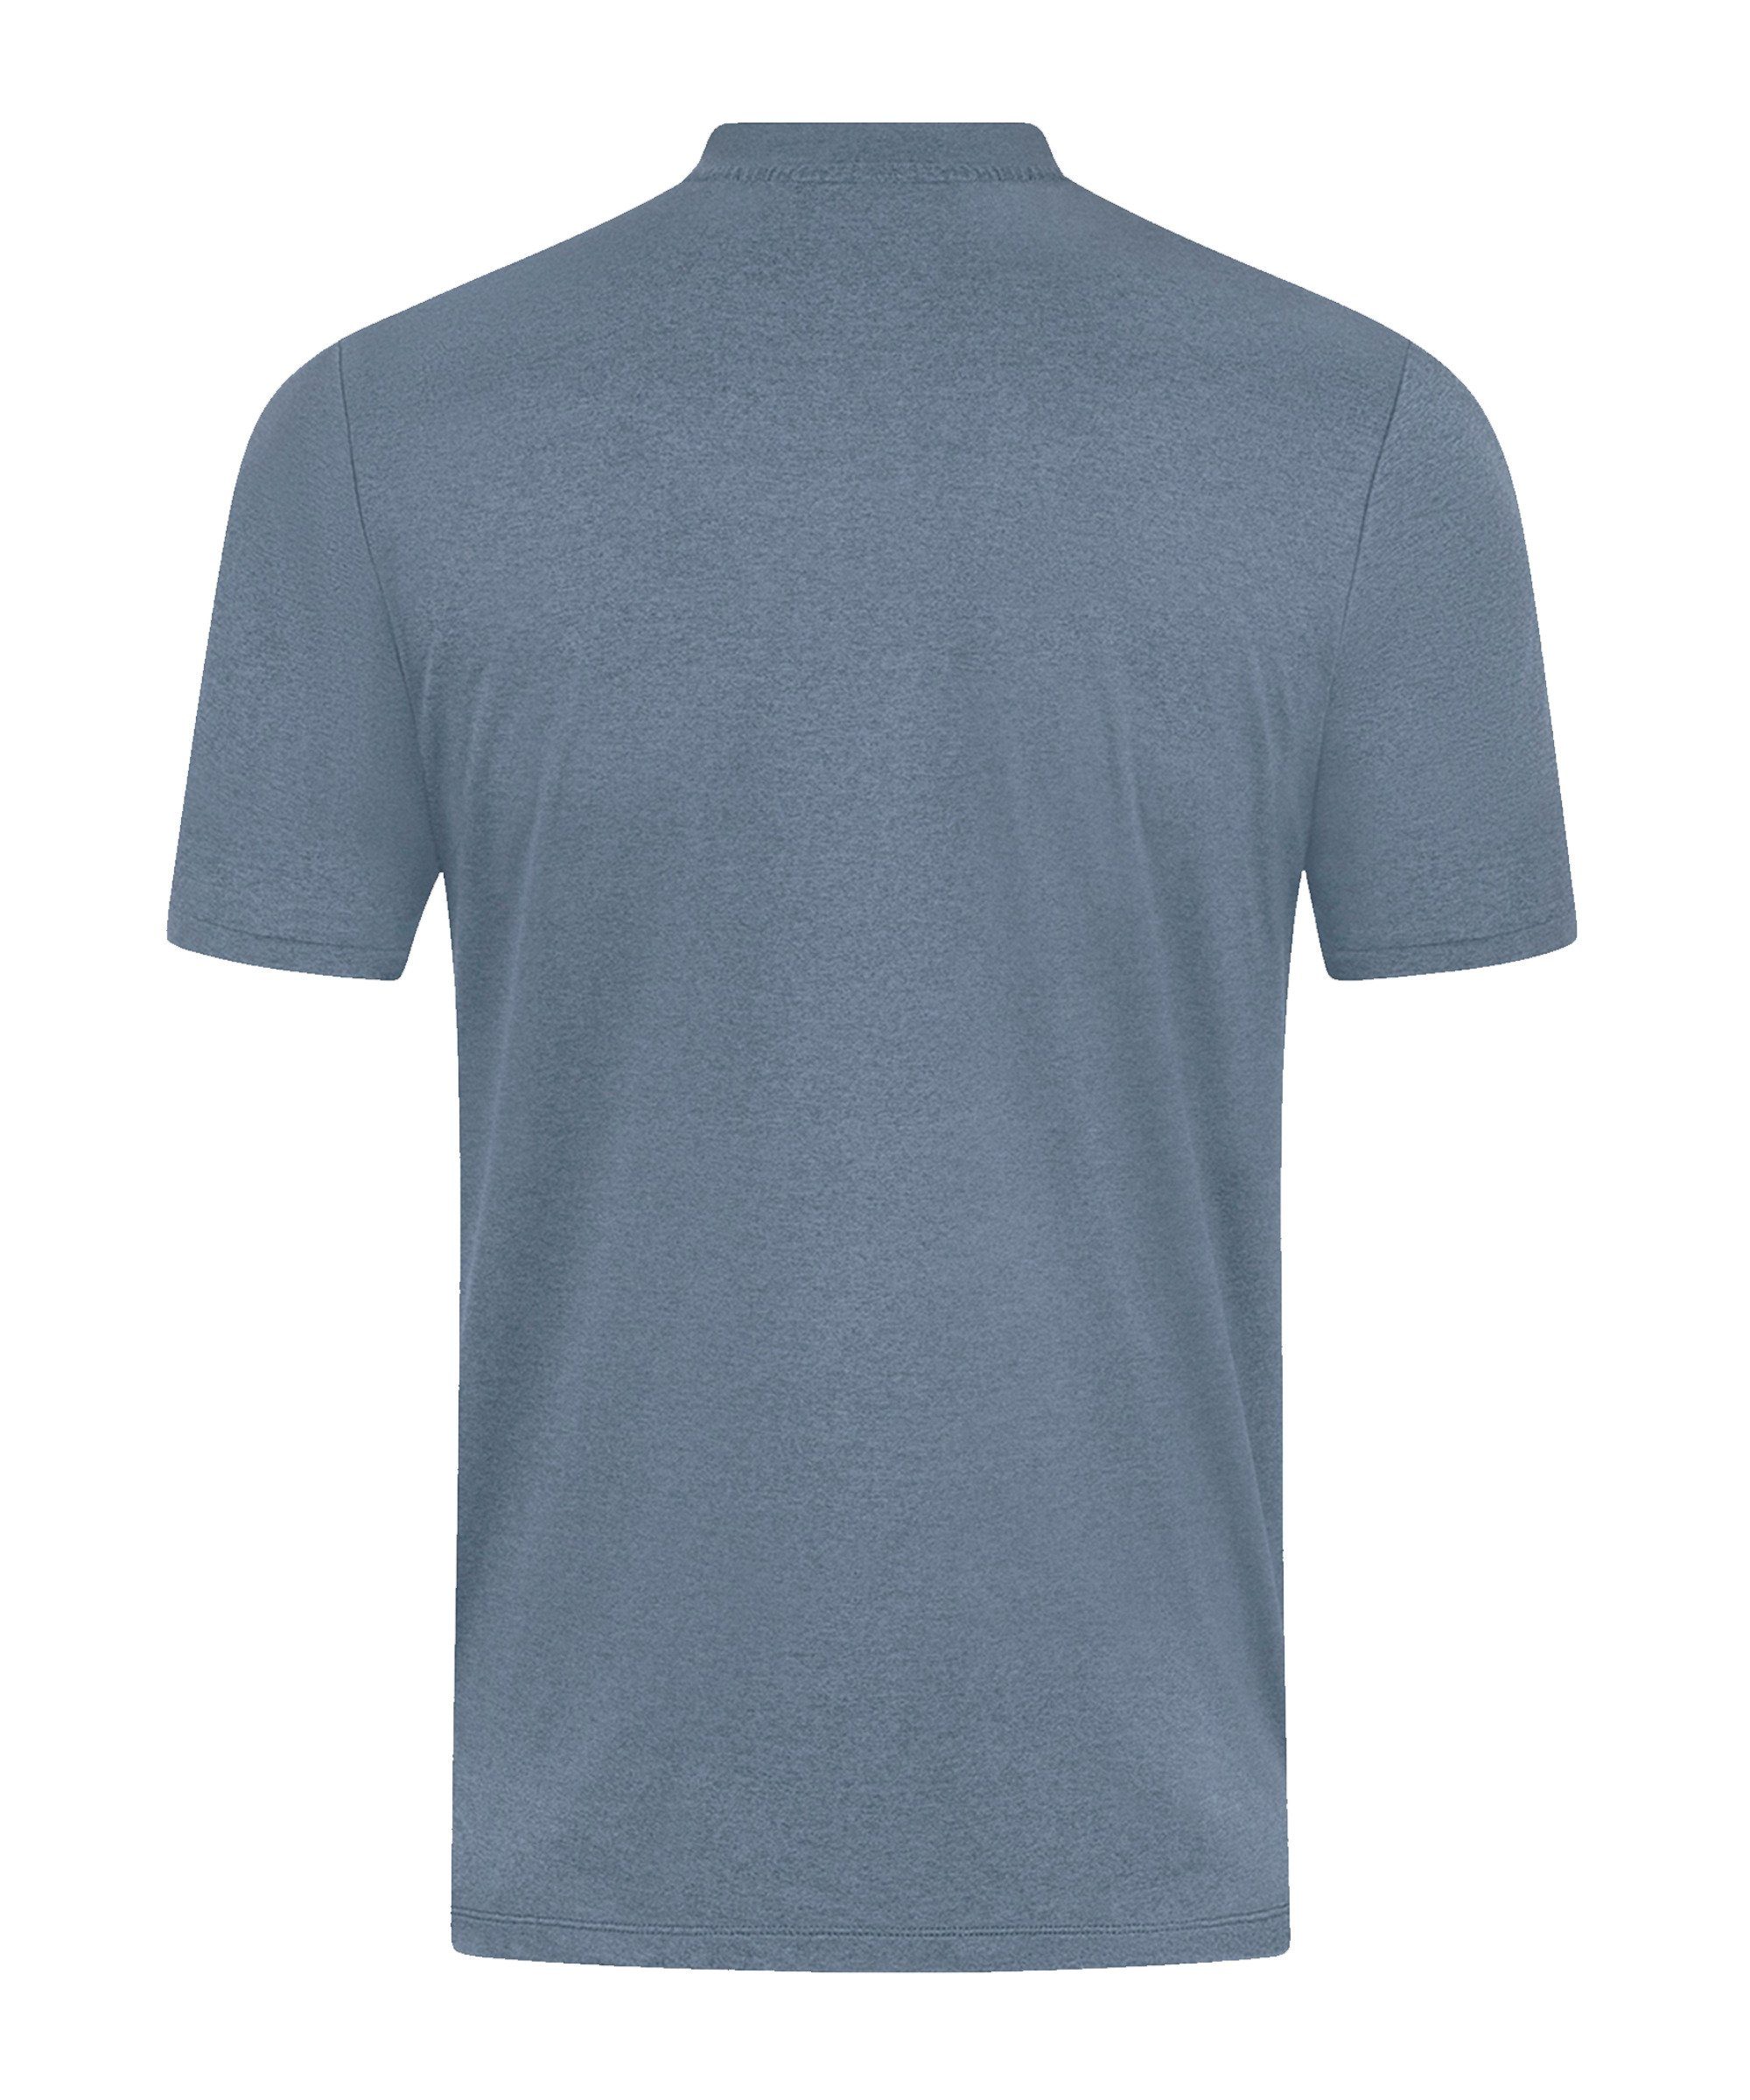 Jako T-Shirt Casual Pro blau Poloshirt default